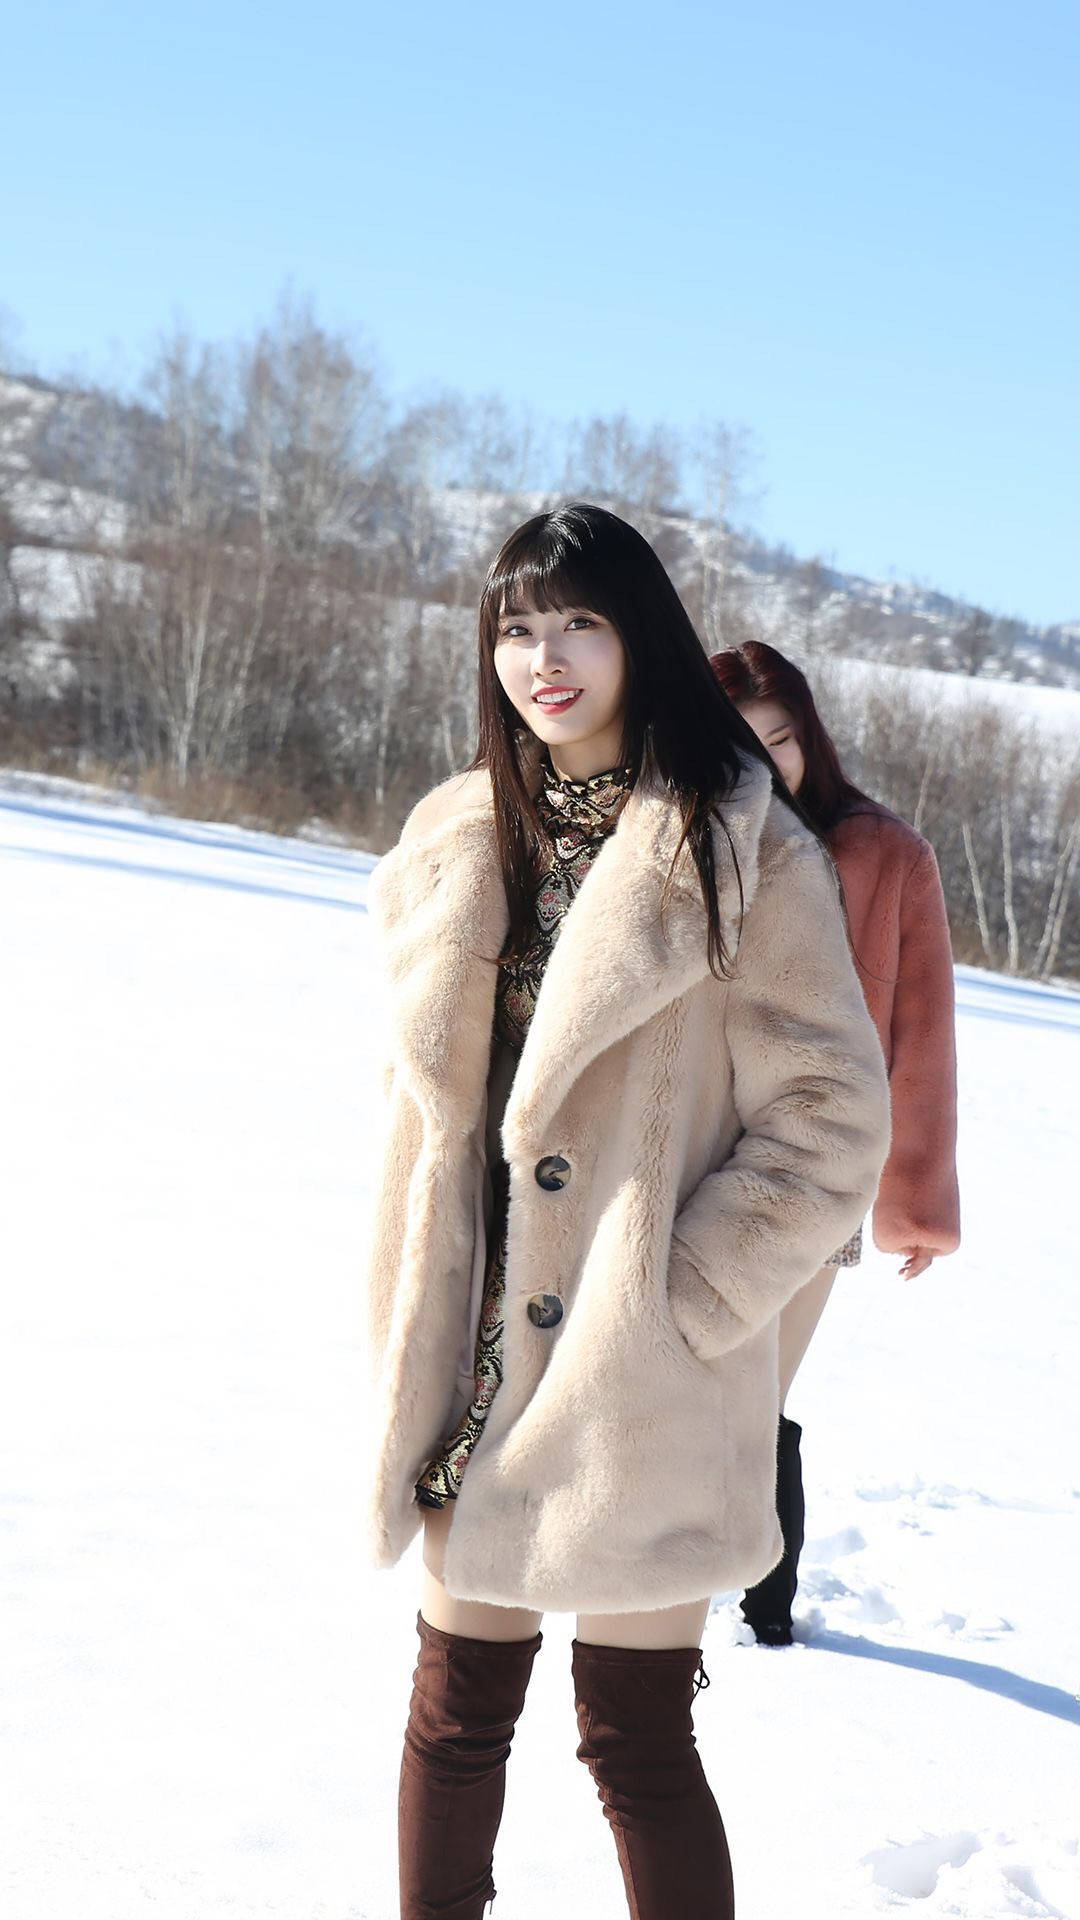 Hirai Momo In Snow Background